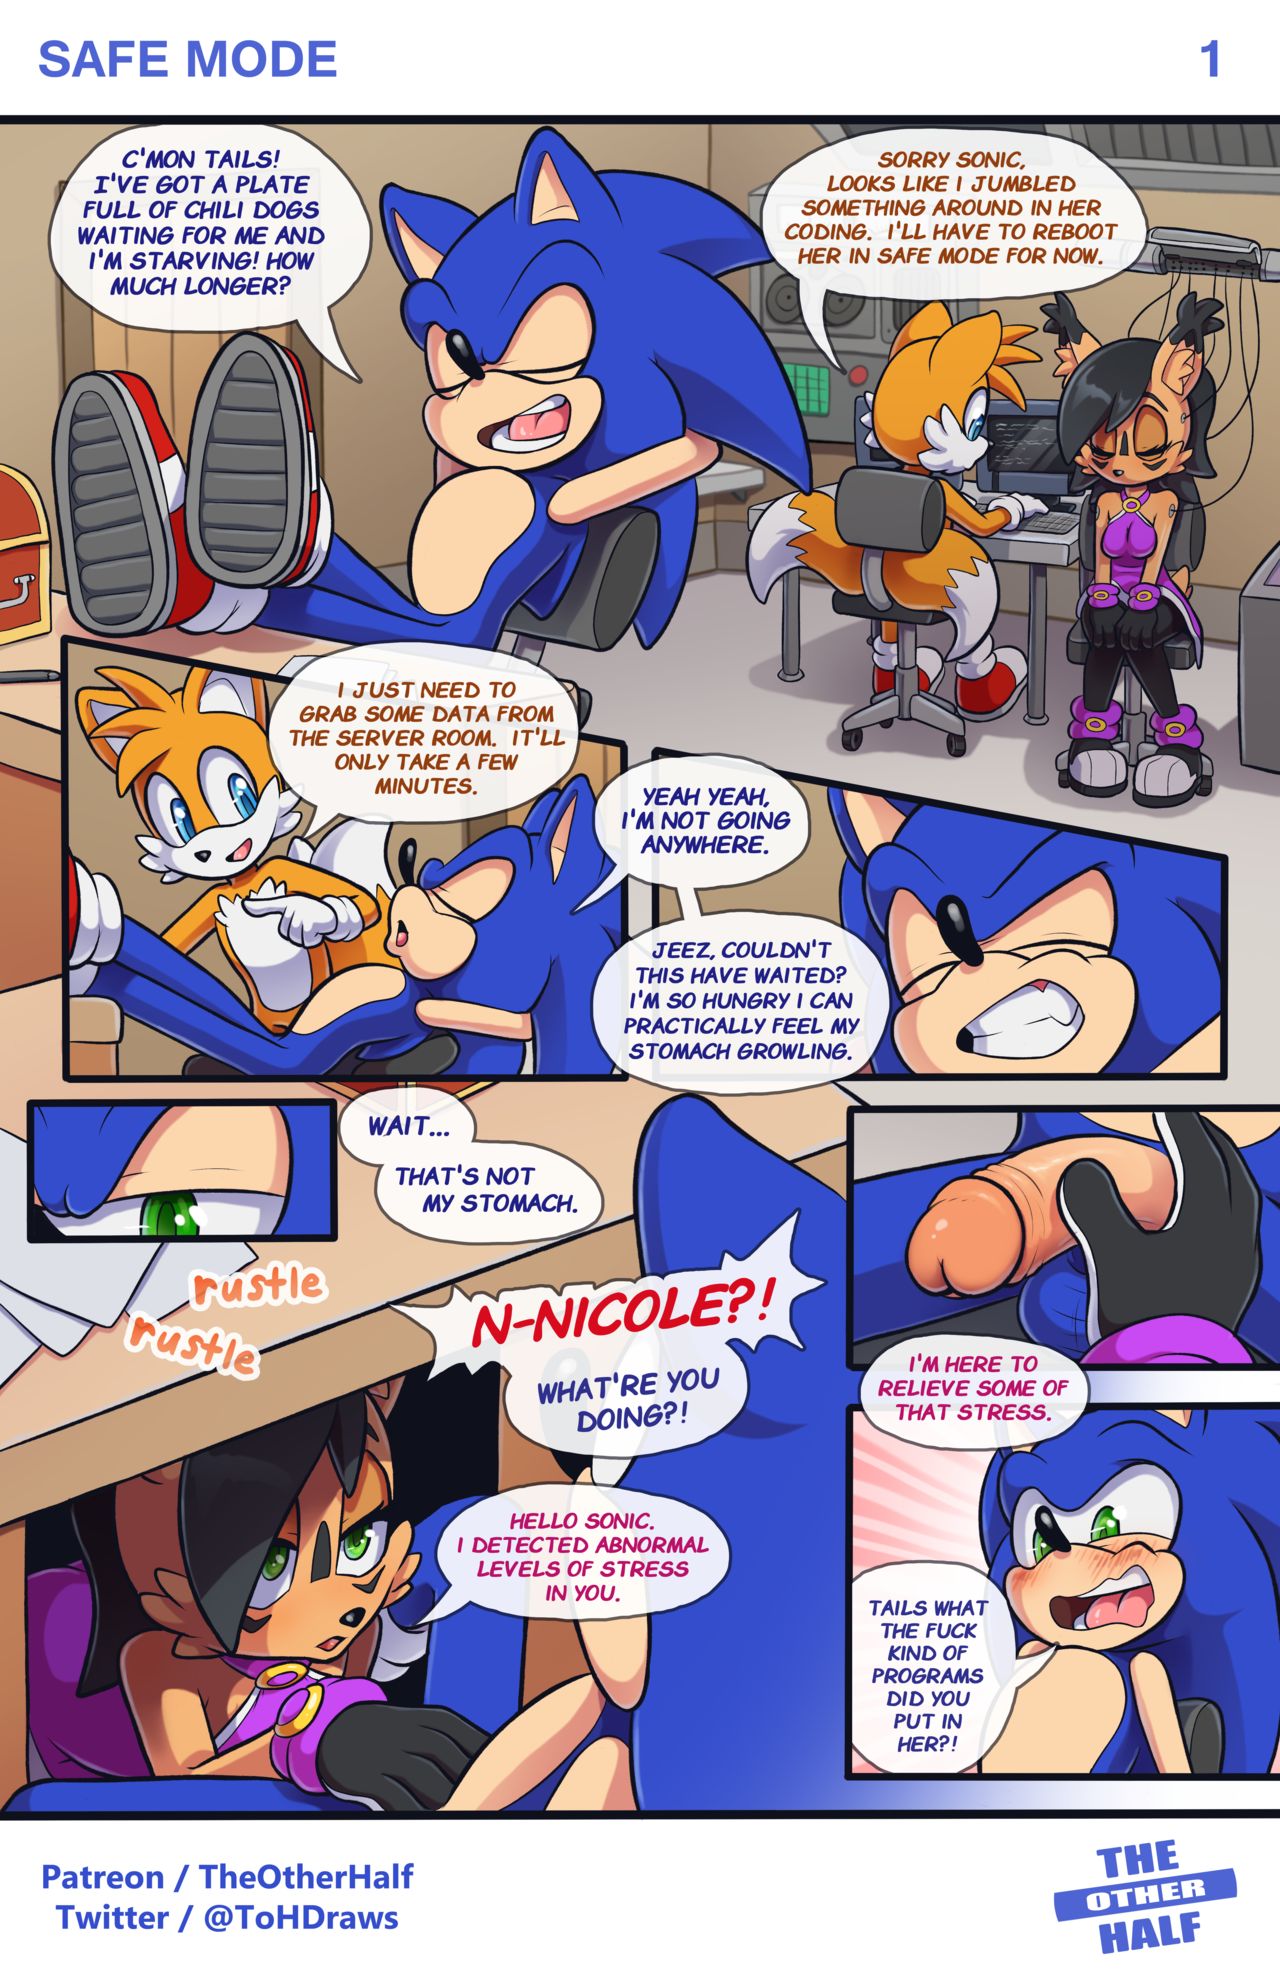 Sonic Furry Futa Porn - Safe Mode - Sonic the Hedgehog [TheOtherHalf ...